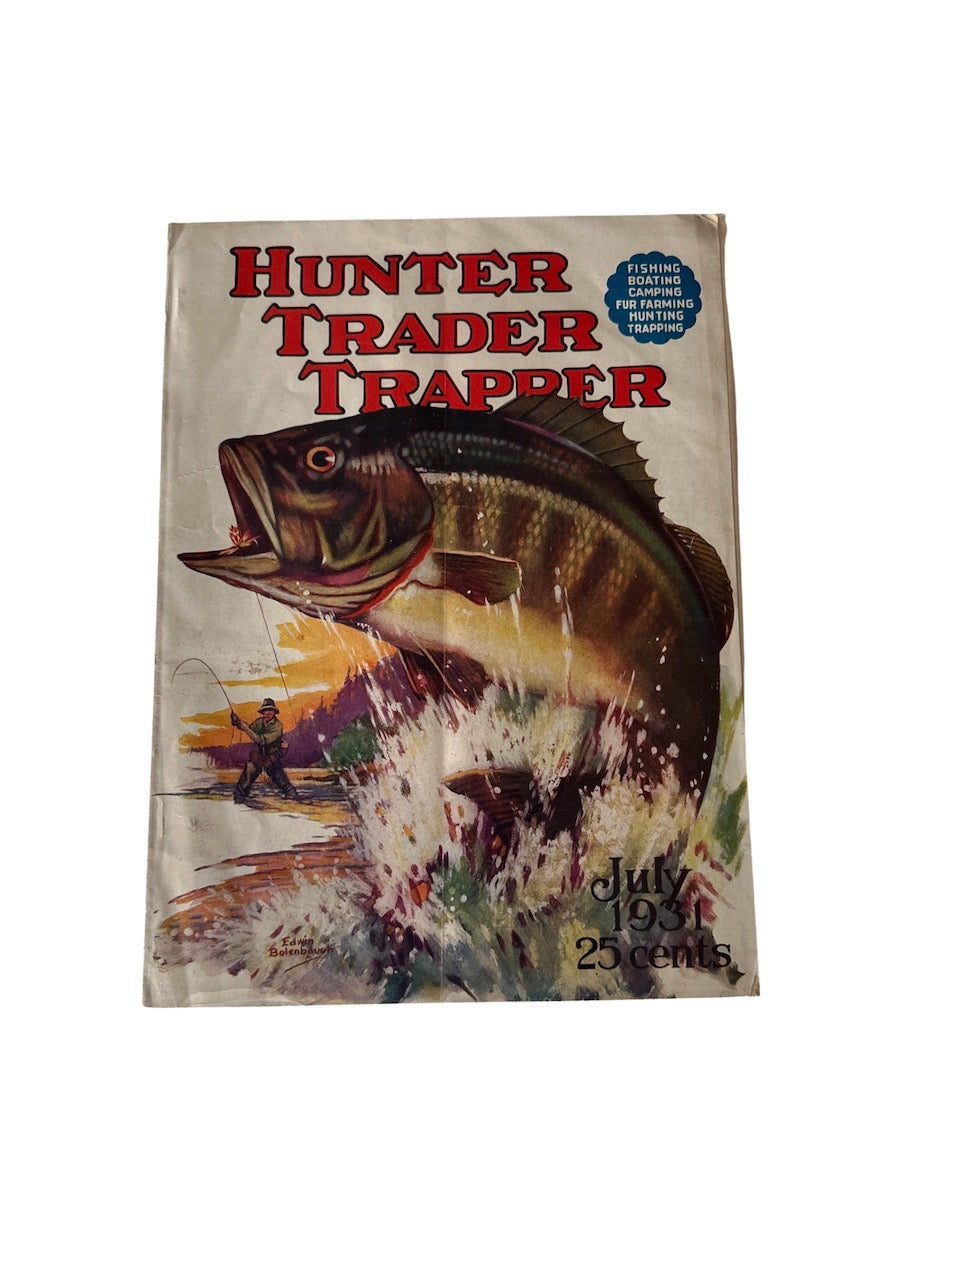 1931 Hunter Trader Trapper magazine